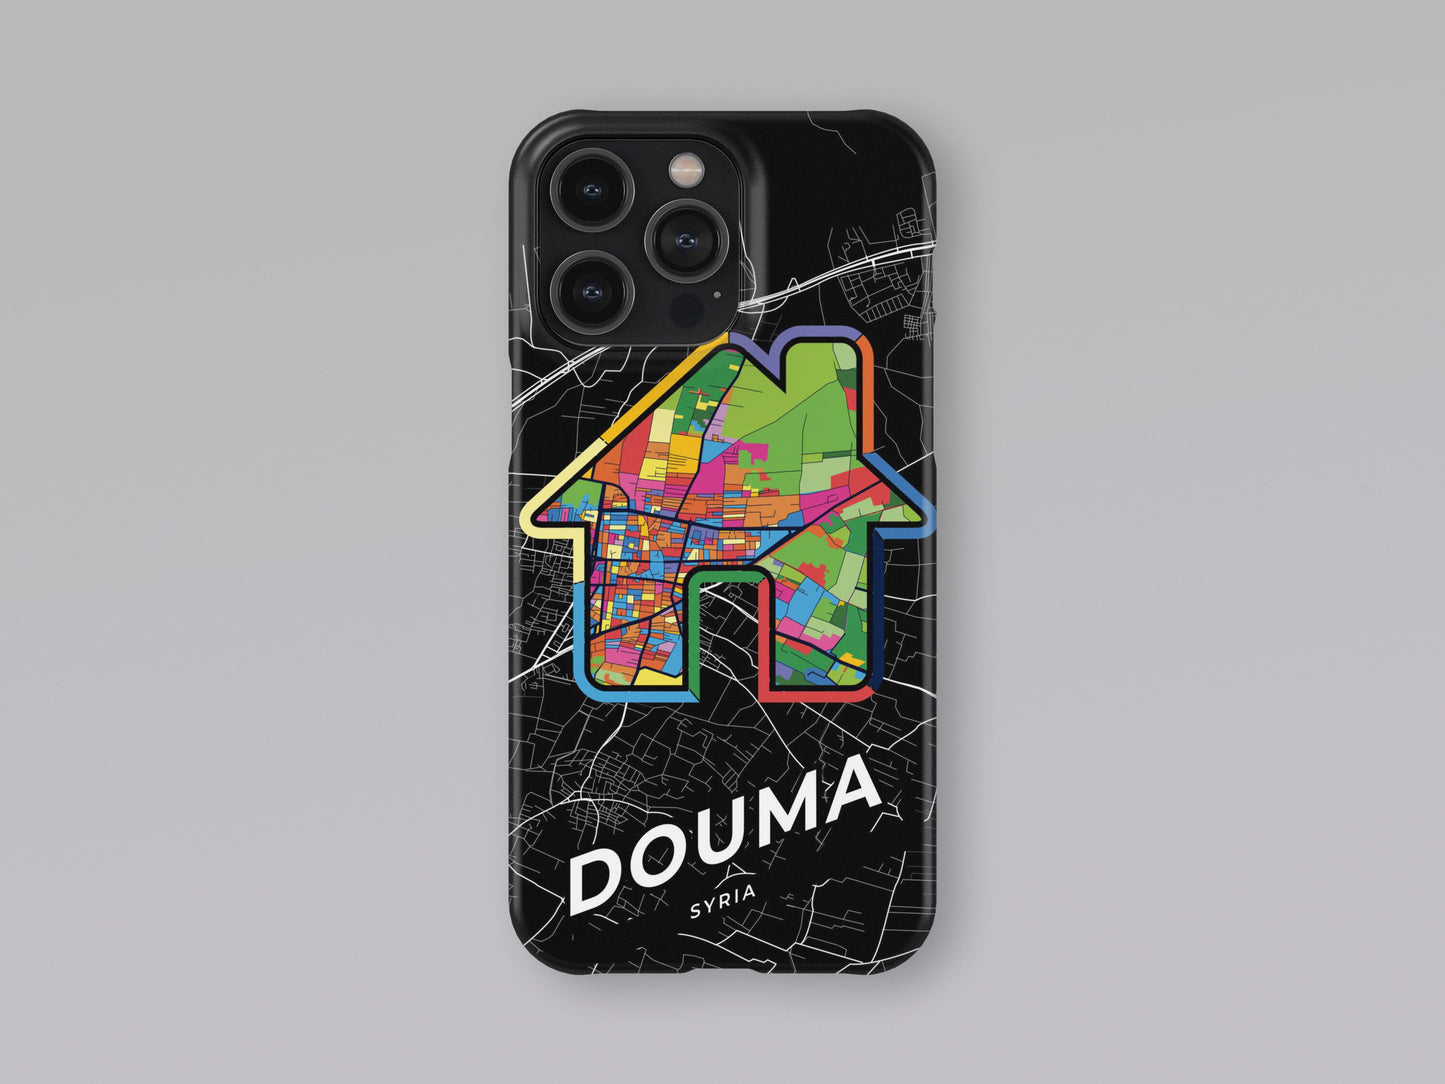 Douma Syria slim phone case with colorful icon. Birthday, wedding or housewarming gift. Couple match cases. 3